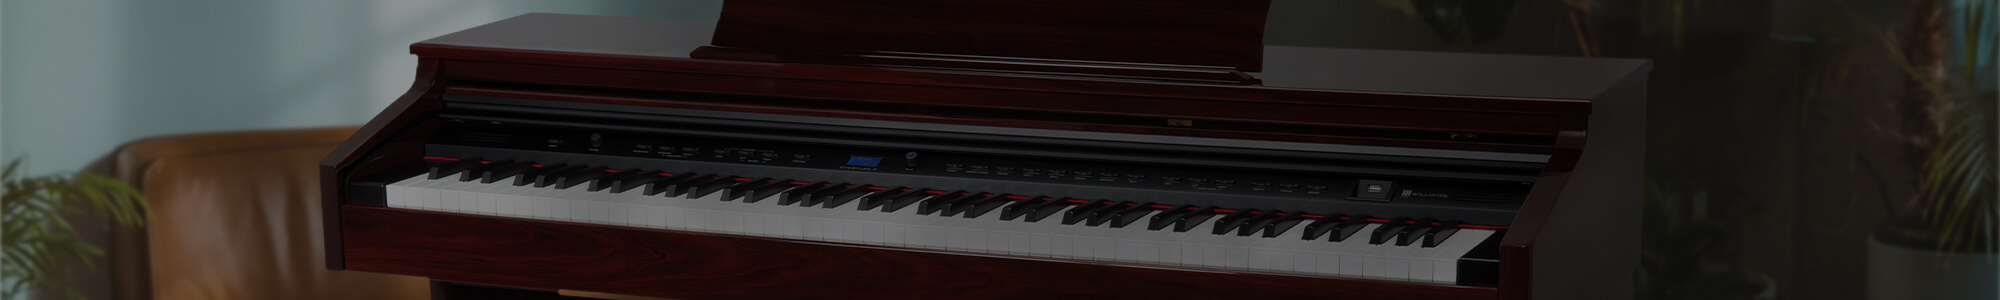 Williams Overture 2 digital piano.